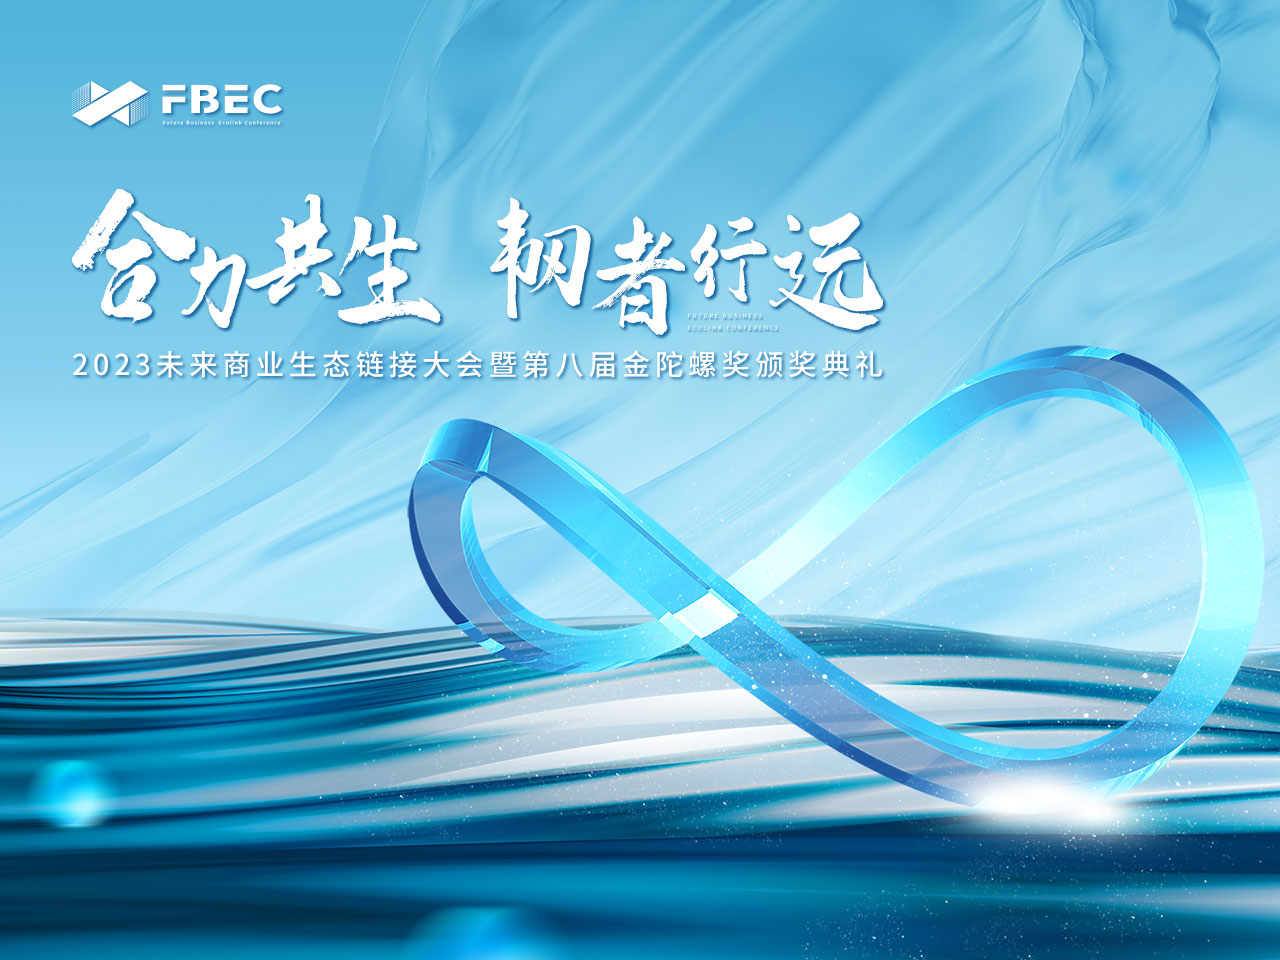 FBEC2023 | 星纪魅族集团 XR事业部总裁 卢勇确认出席并发表主题演讲